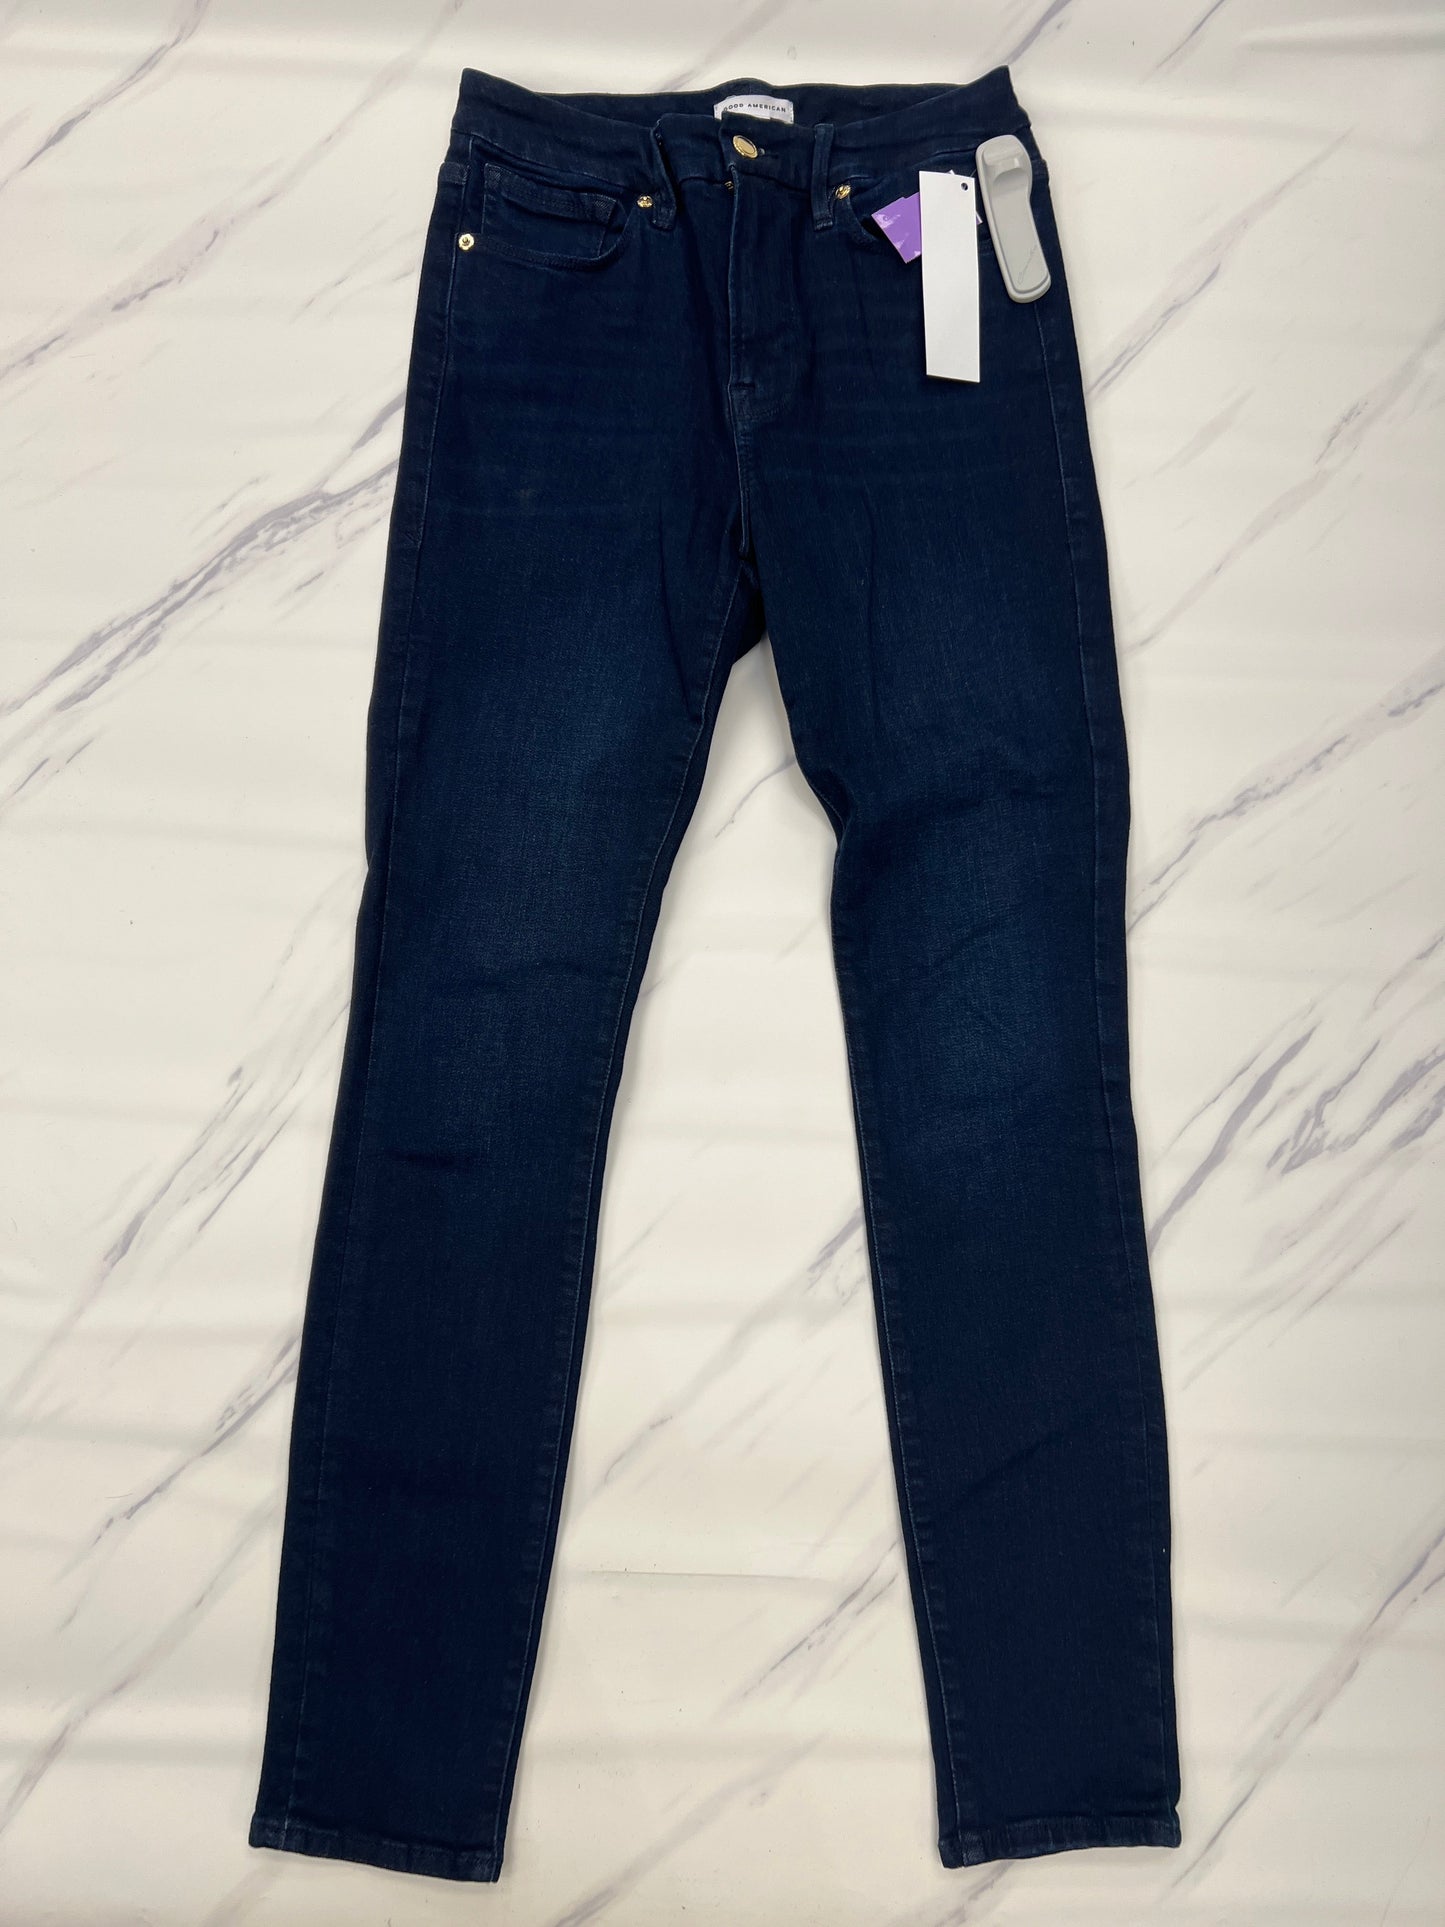 Jeans Designer Good American, Size 6